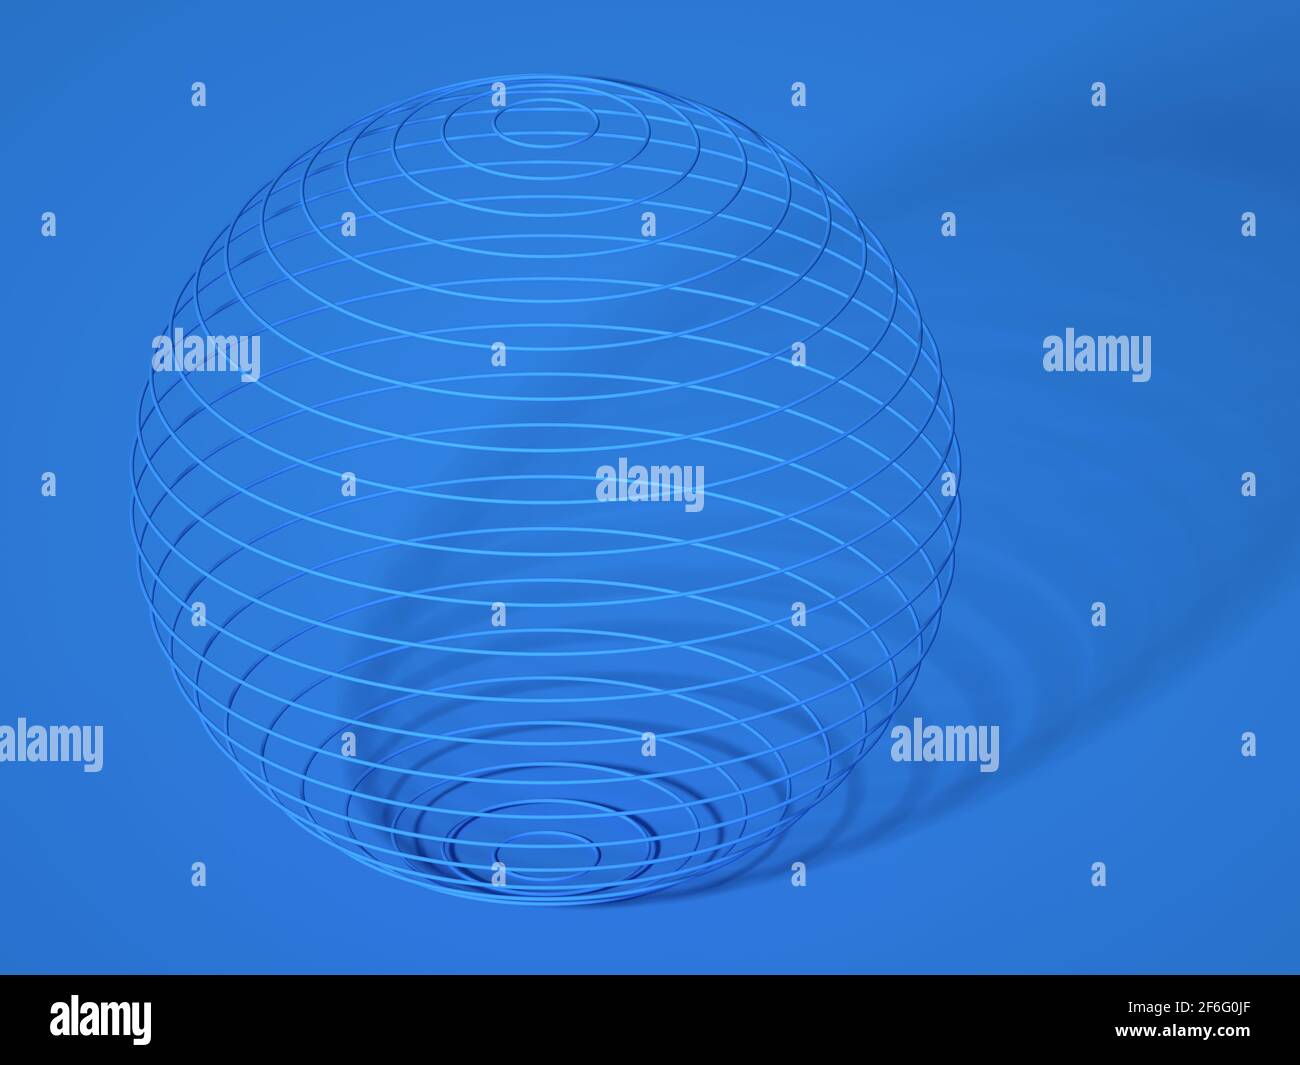 Abstraktes blaues 3d-Objekt mit Schatten, Satz fliegender Ringe in Kugelform, 3d-Rendering-Illustration Stockfoto